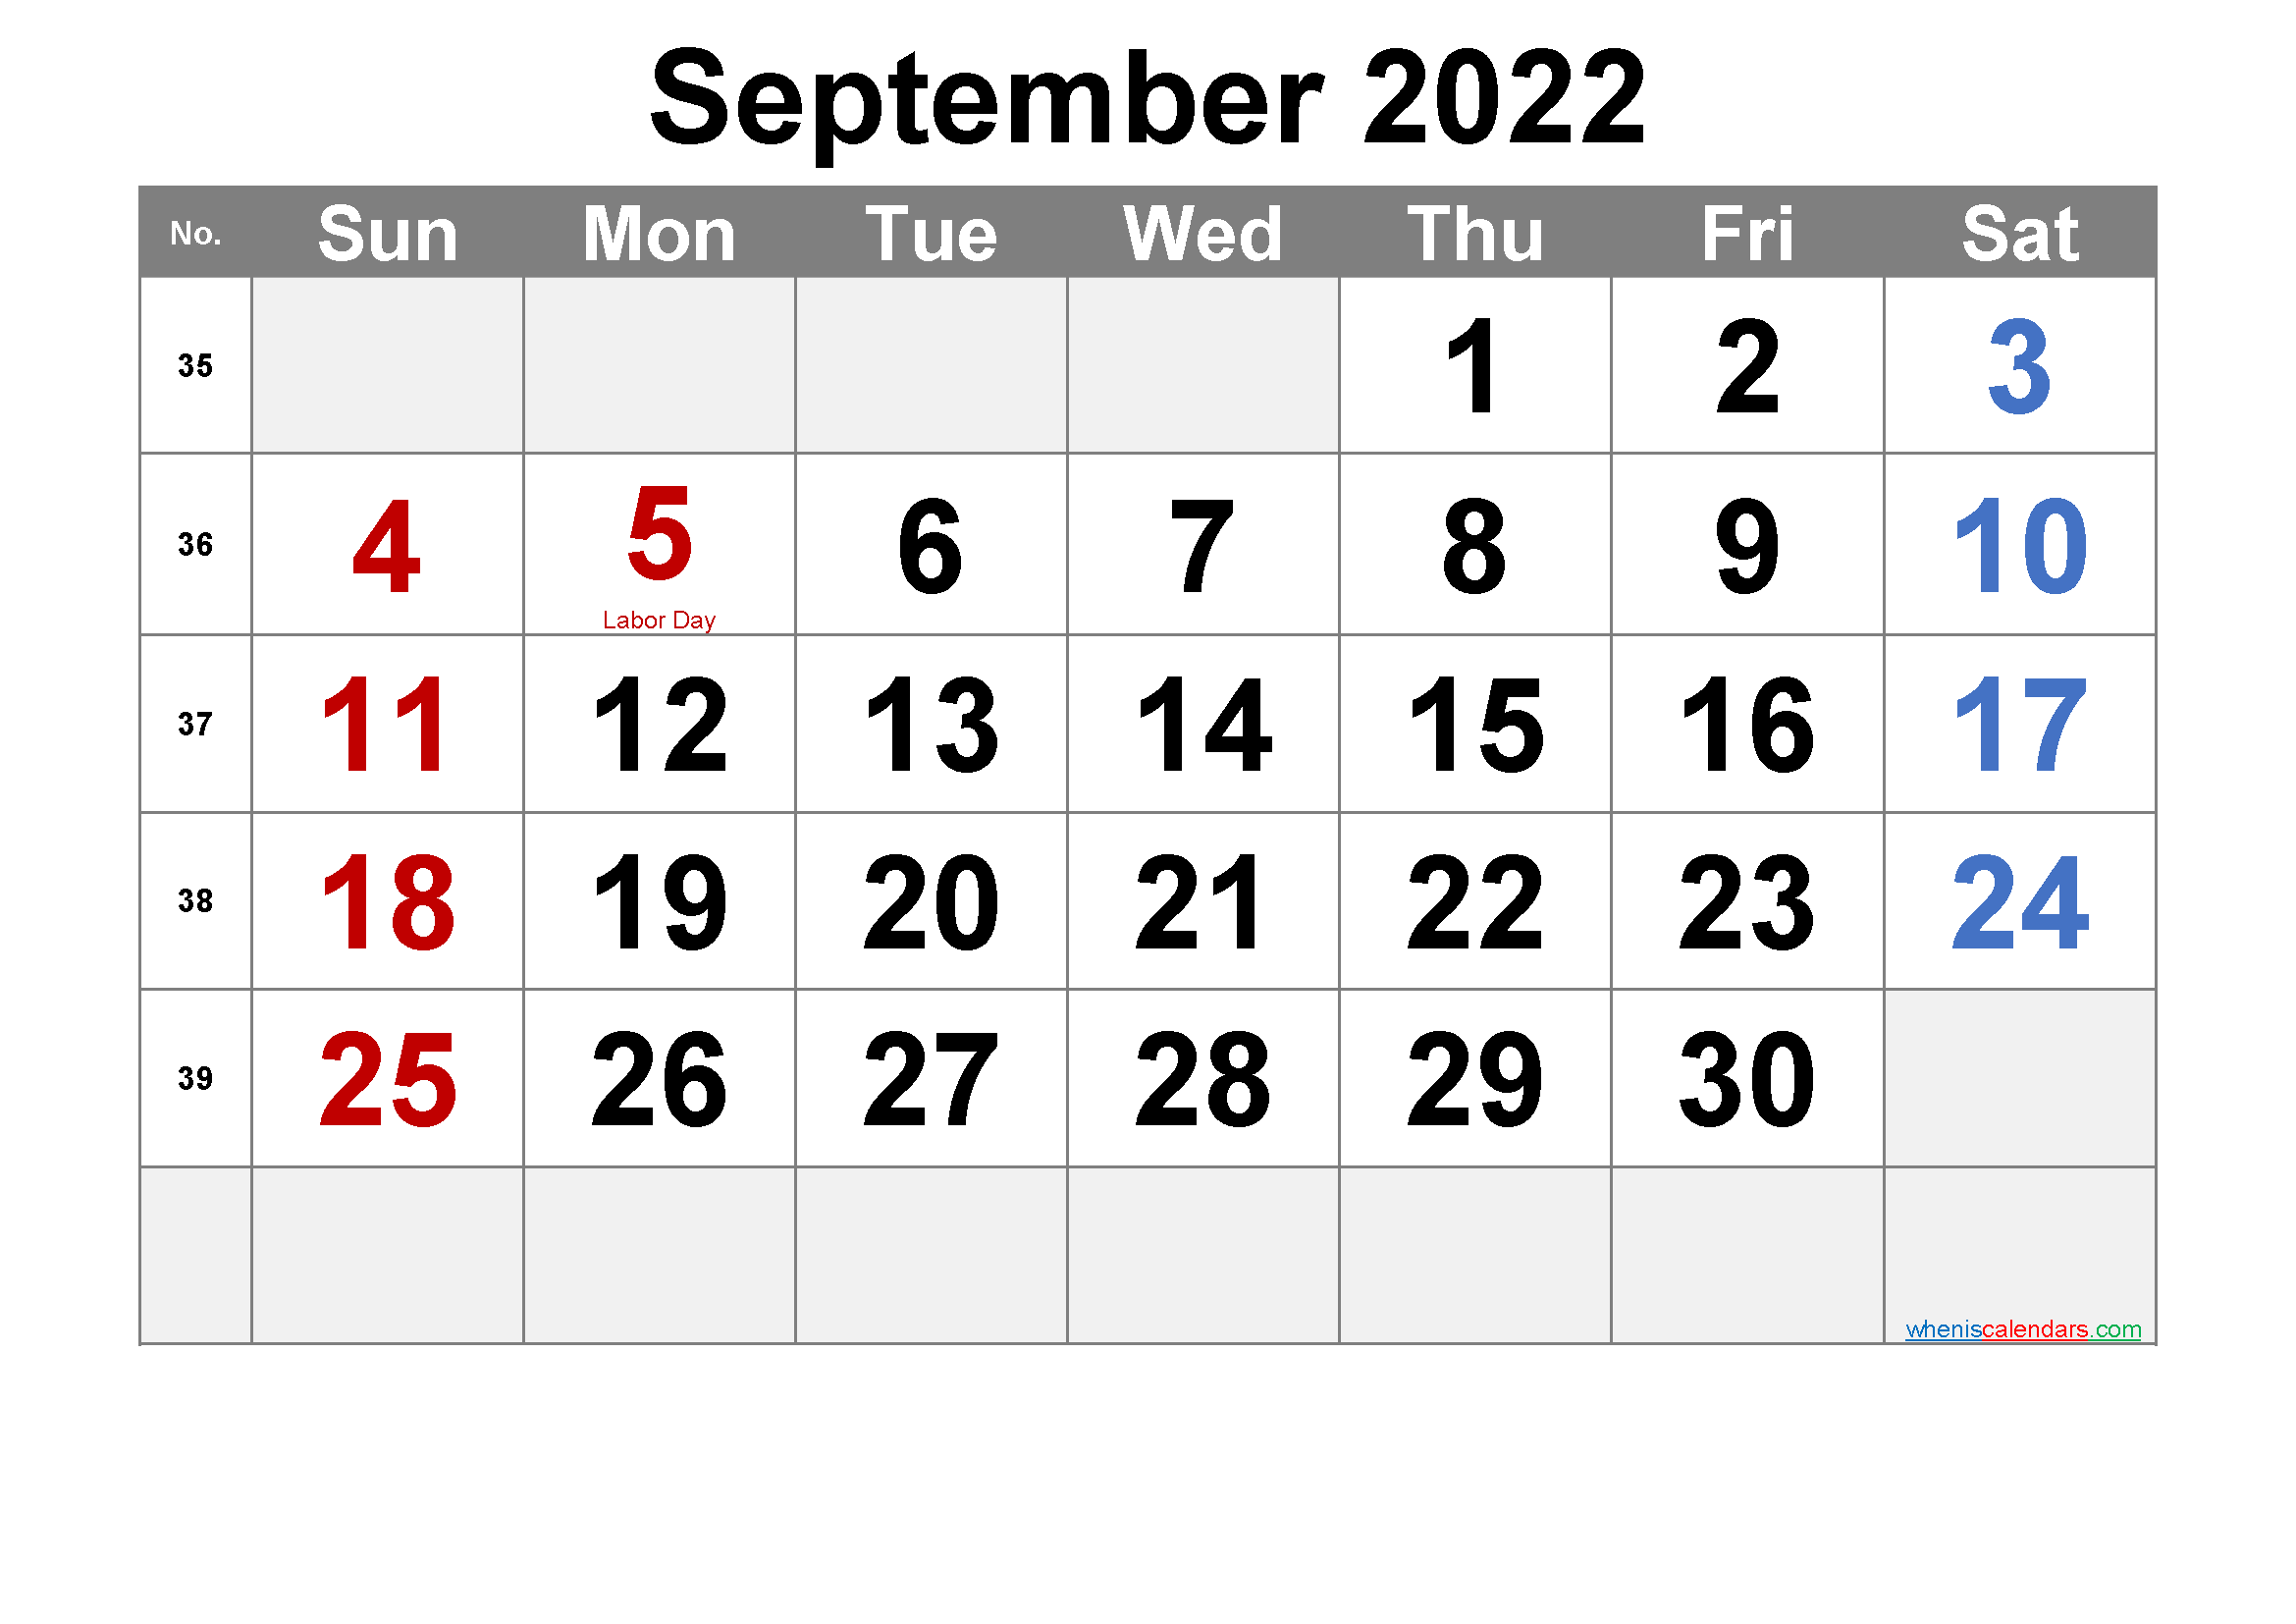 September 2022 Printable Calendar with Holidays